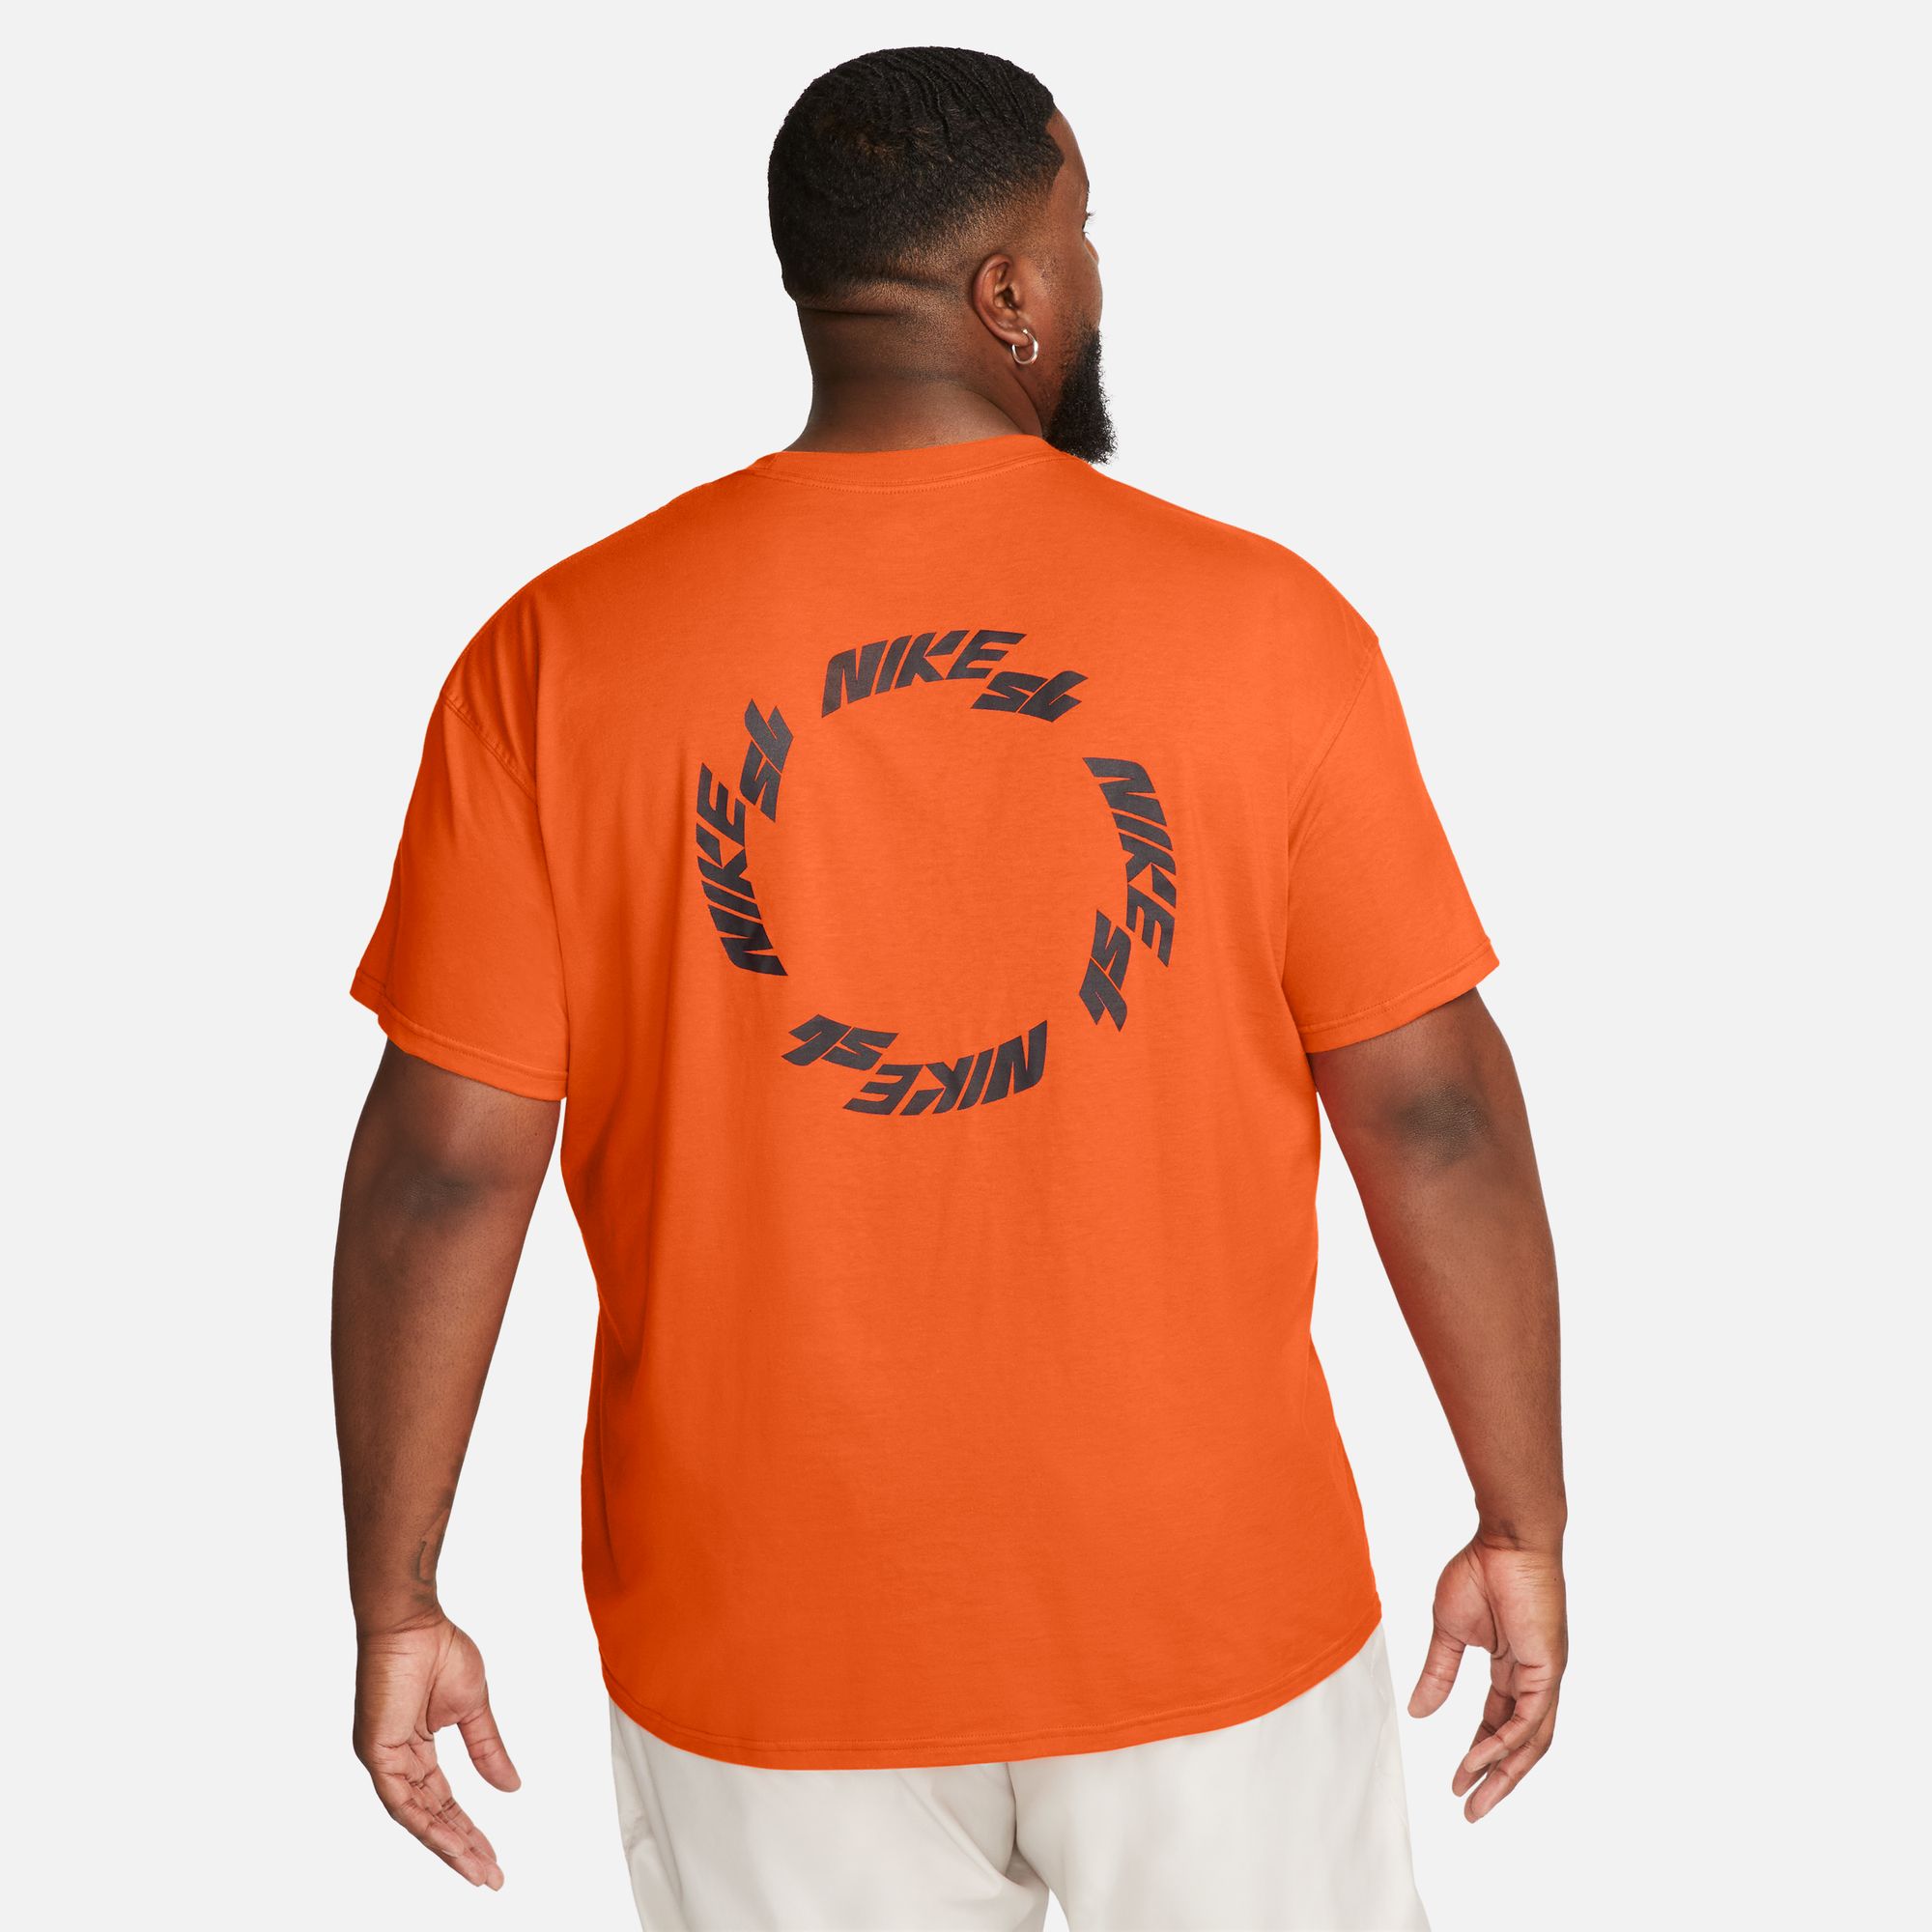 Nike SB Men's Skate T-Shirt Safety Orange